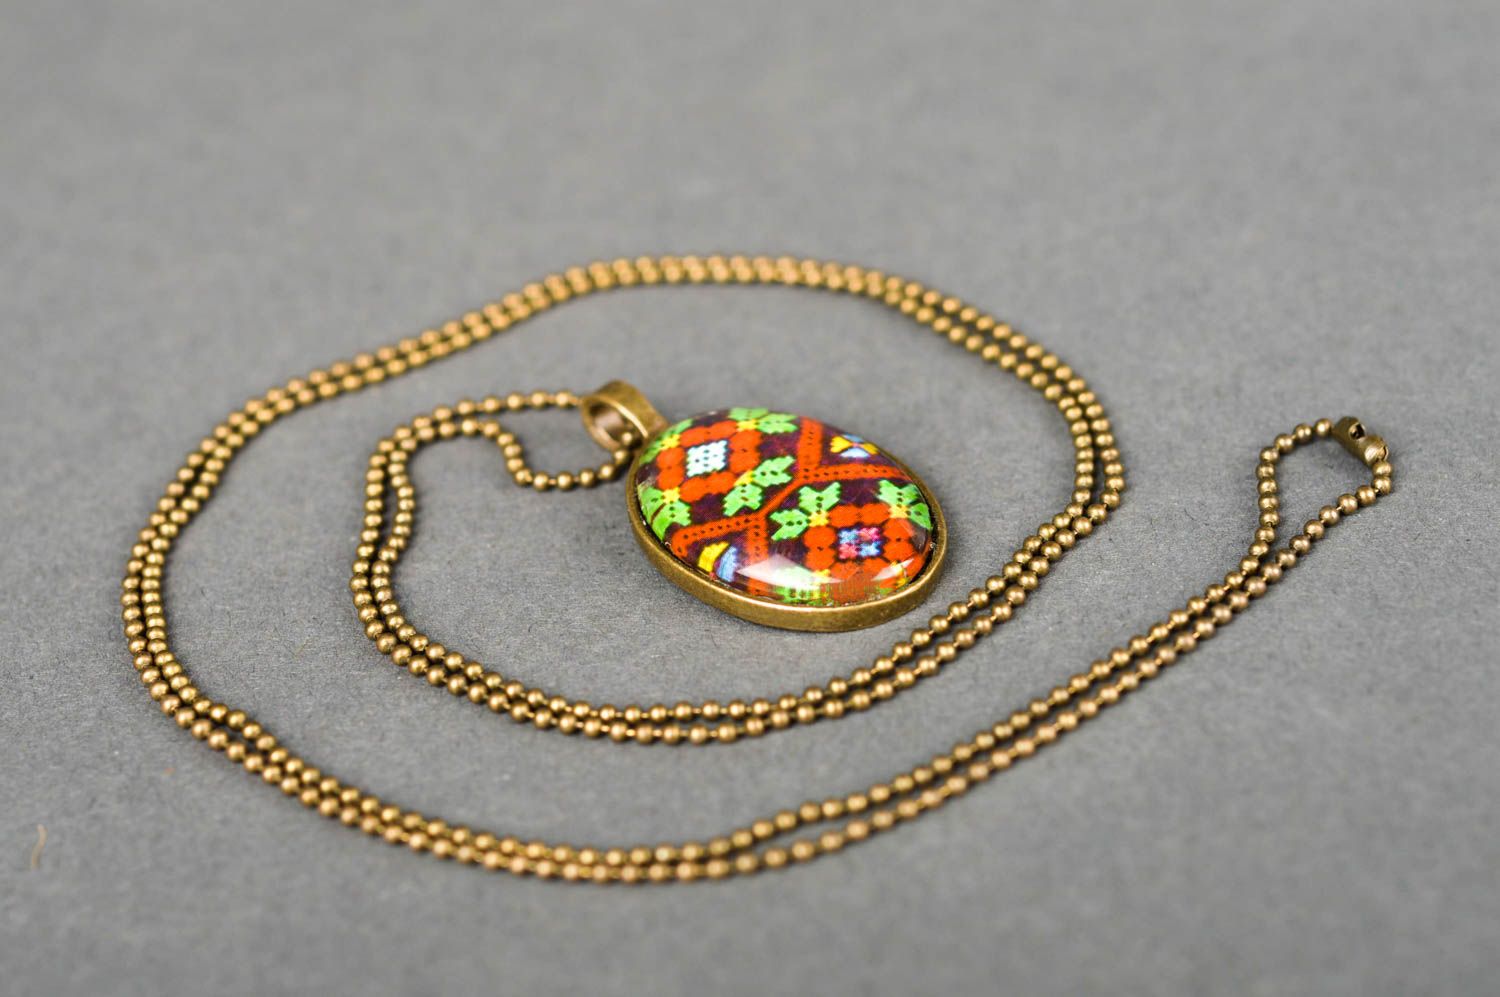 Handmade pendant in ethnic style unusual metal pendant designer jewelry photo 1